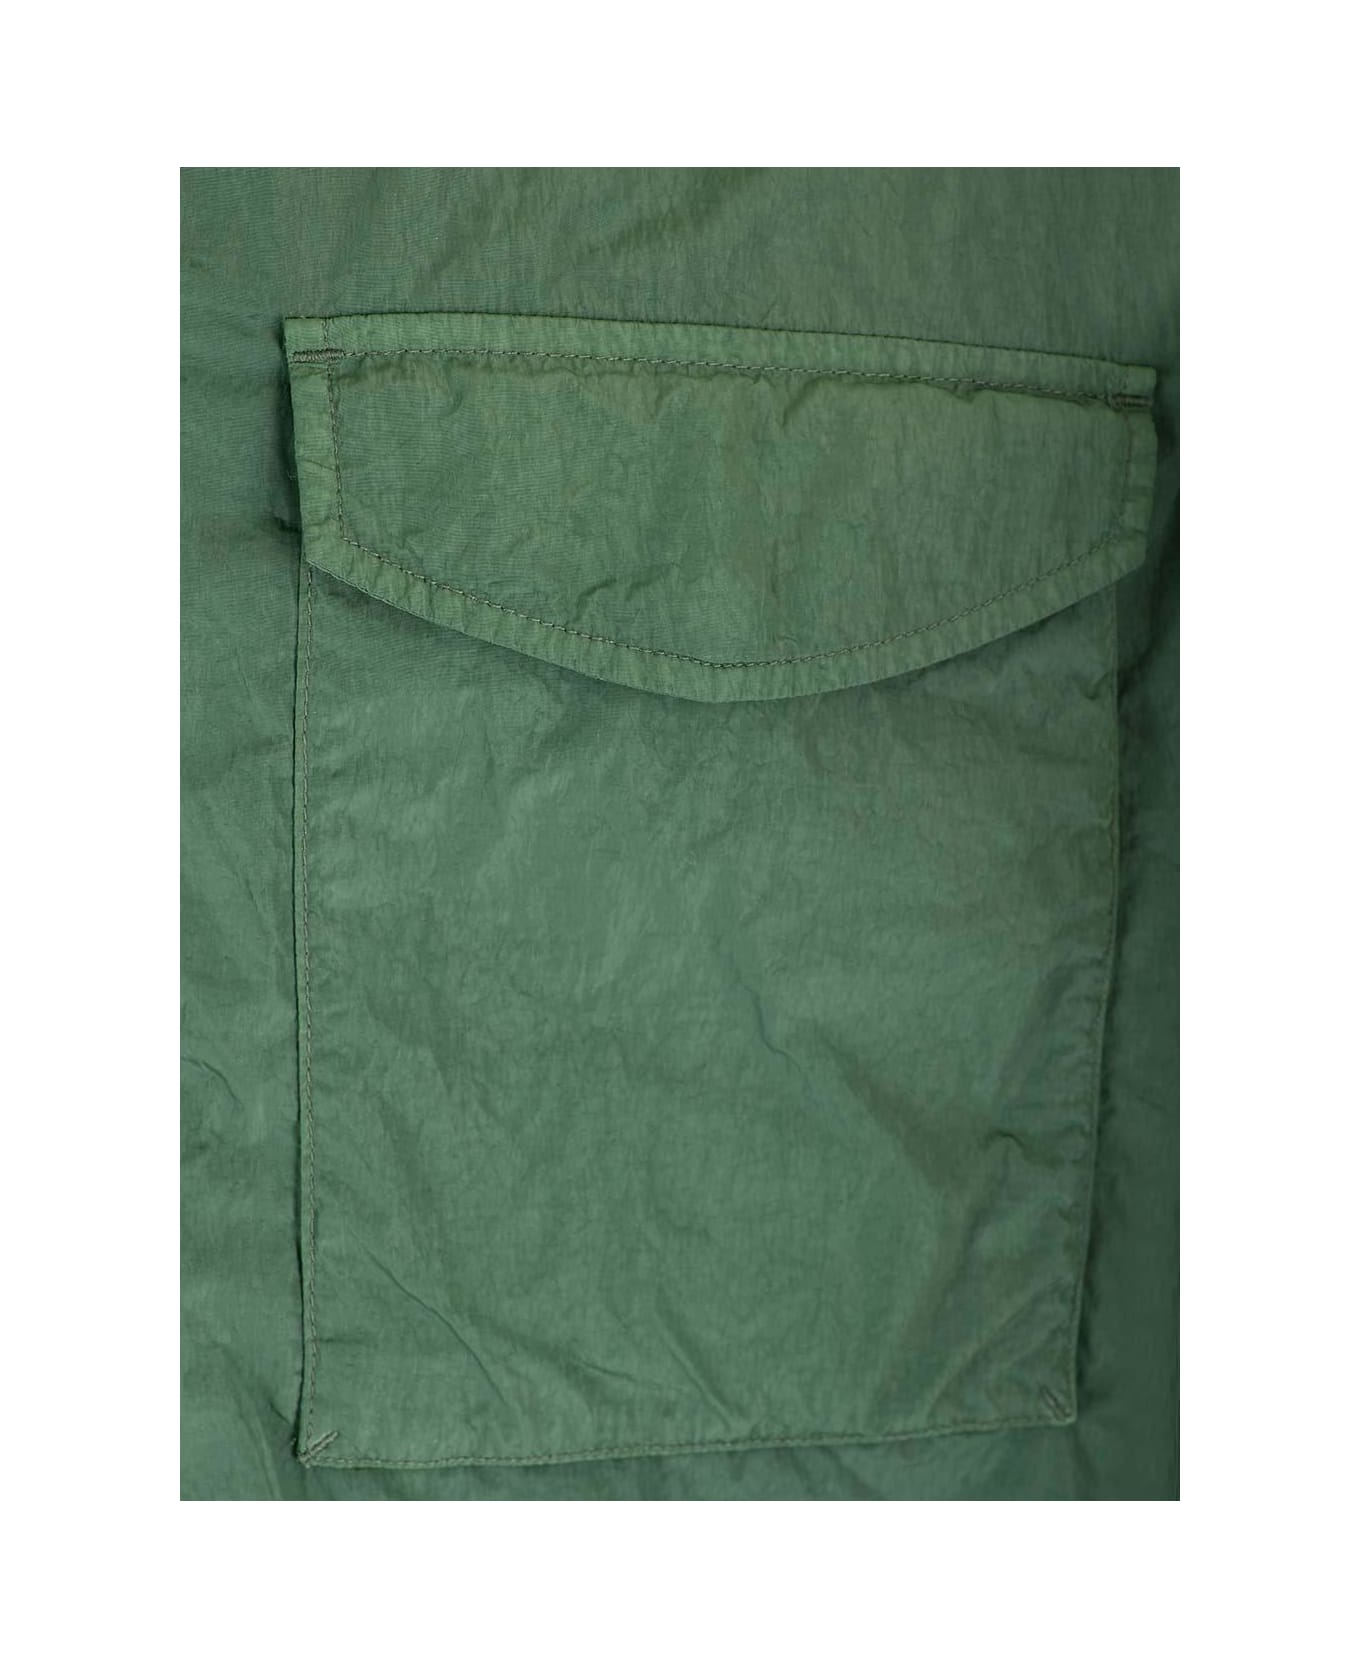 C.P. Company Chrome-r Long-sleeved Overshirt - Green